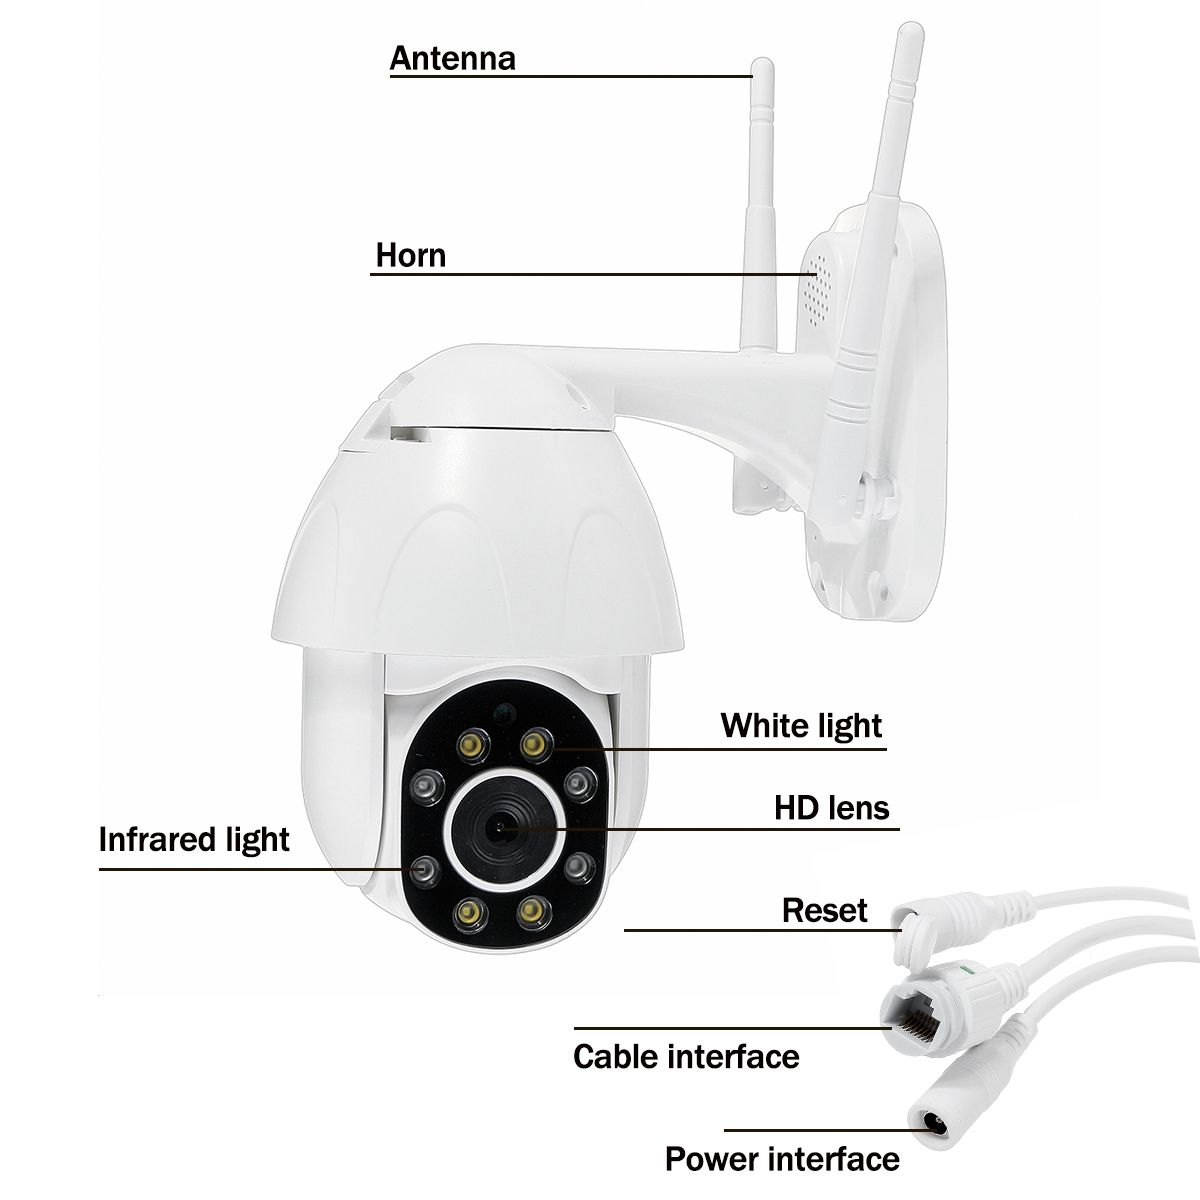 1080P-Wifi-IP-Camera-Waterproof-Outdoor-HD-Full-Color-Night-Vision-Surveillance-360deg-1631932